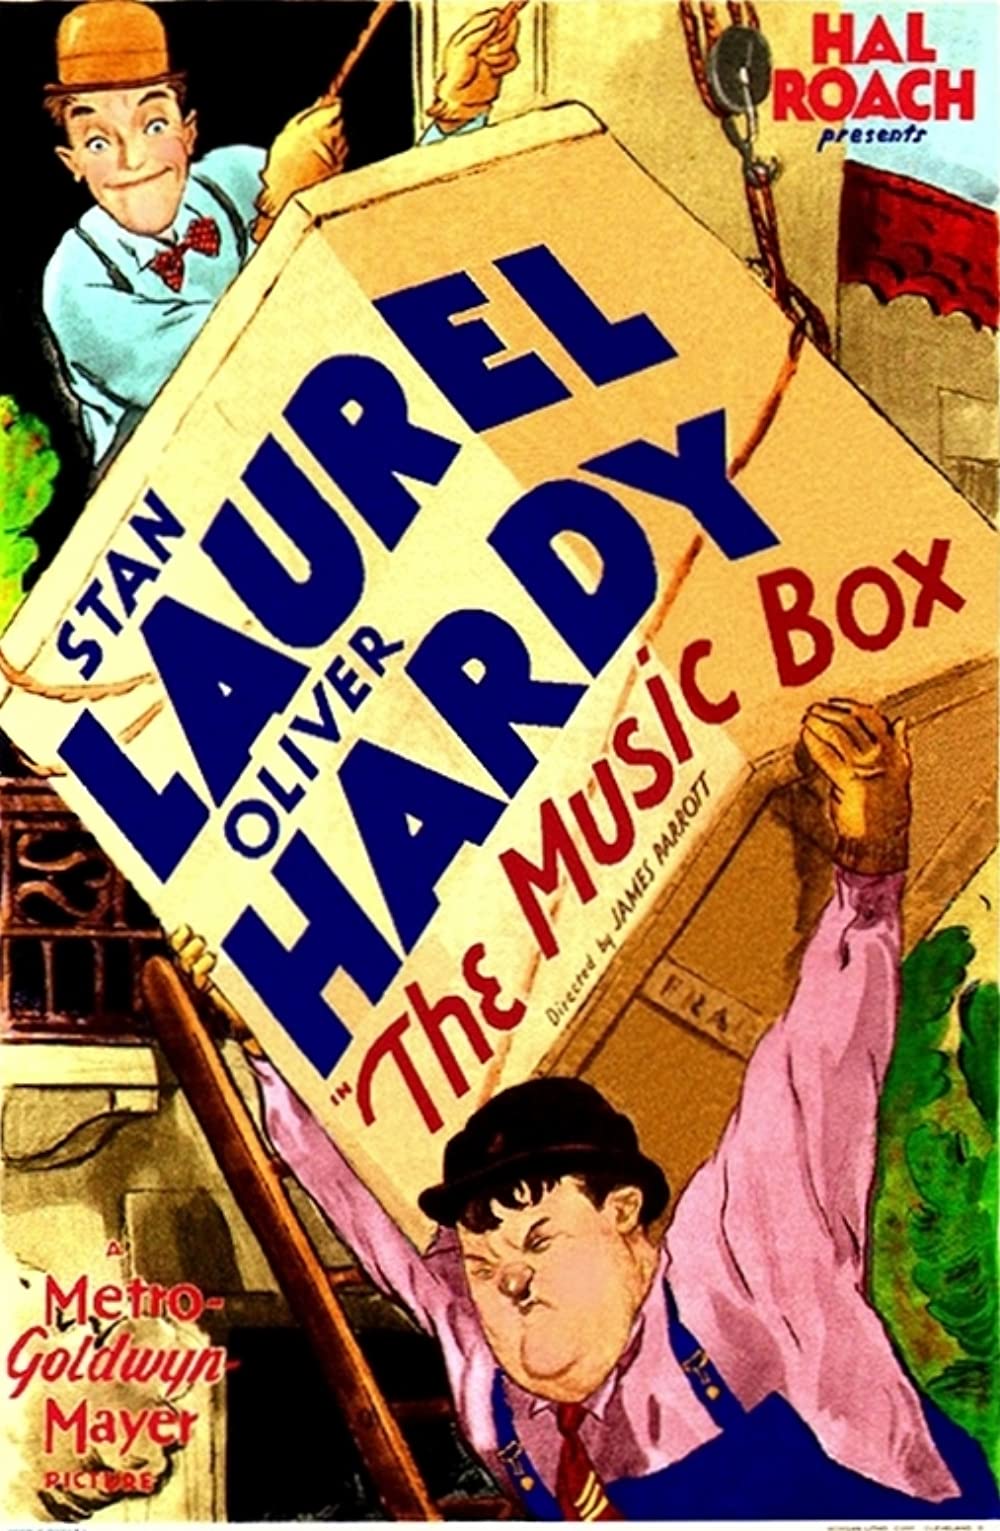 The Music Box (Short 1932)